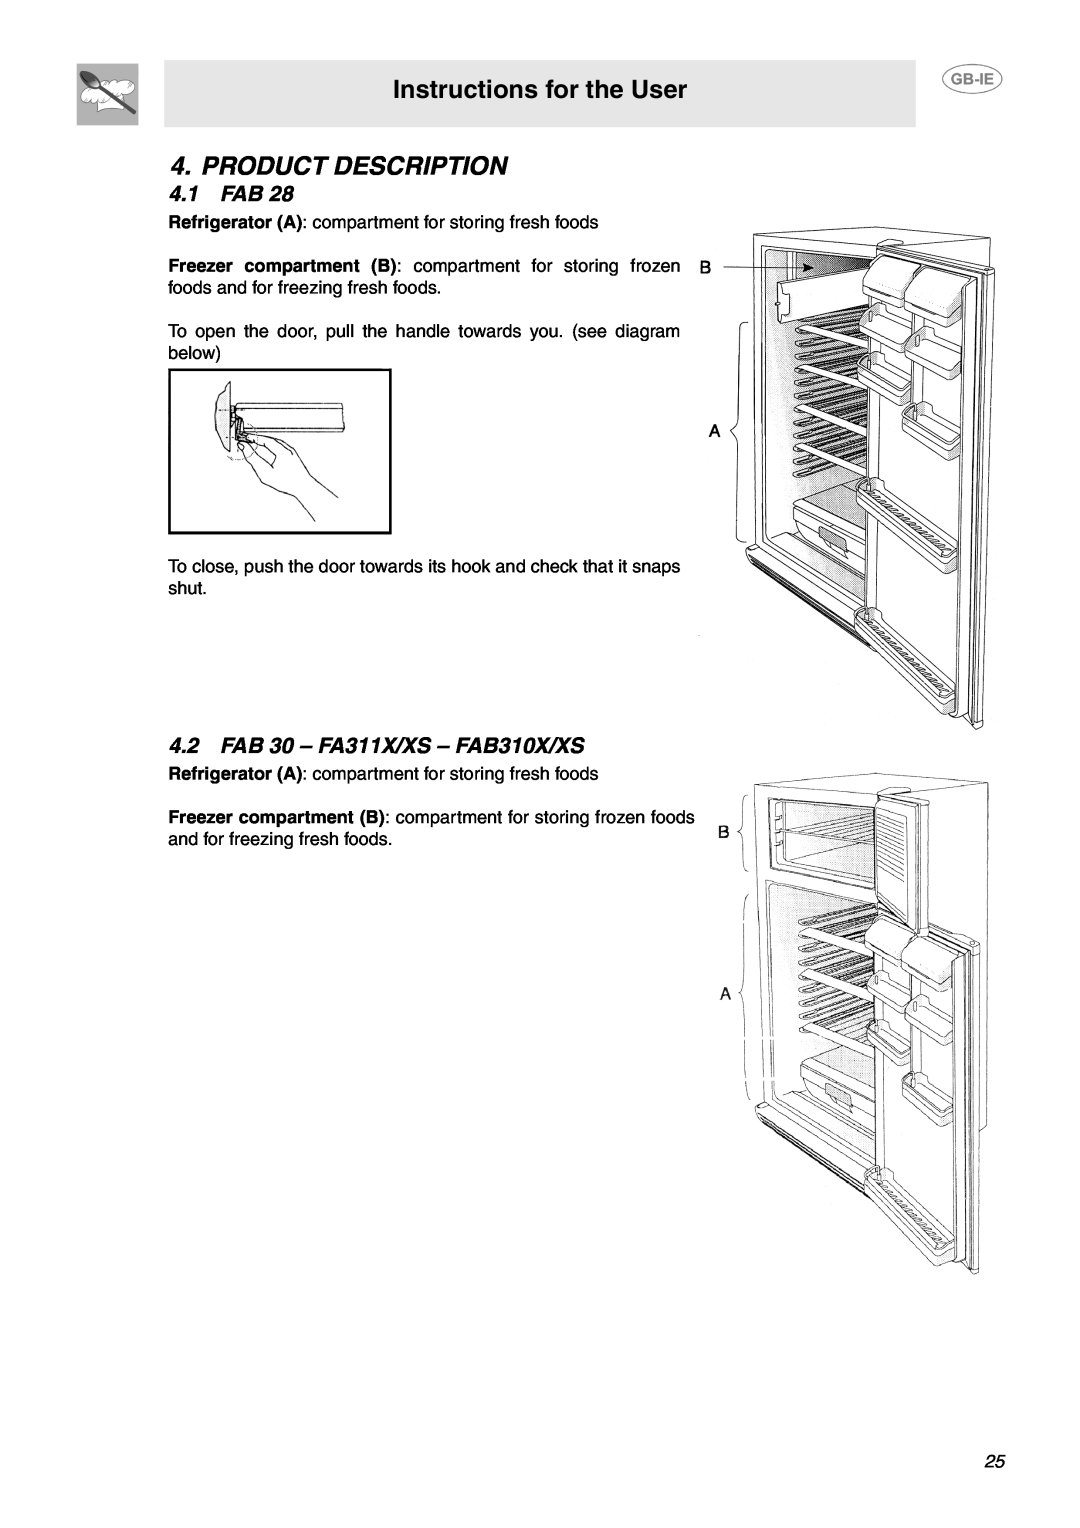 Smeg smeg refrigerator, fab28p Instructions for the User, Product Description, 4.1 FAB, FAB 30 - FA311X/XS - FAB310X/XS 